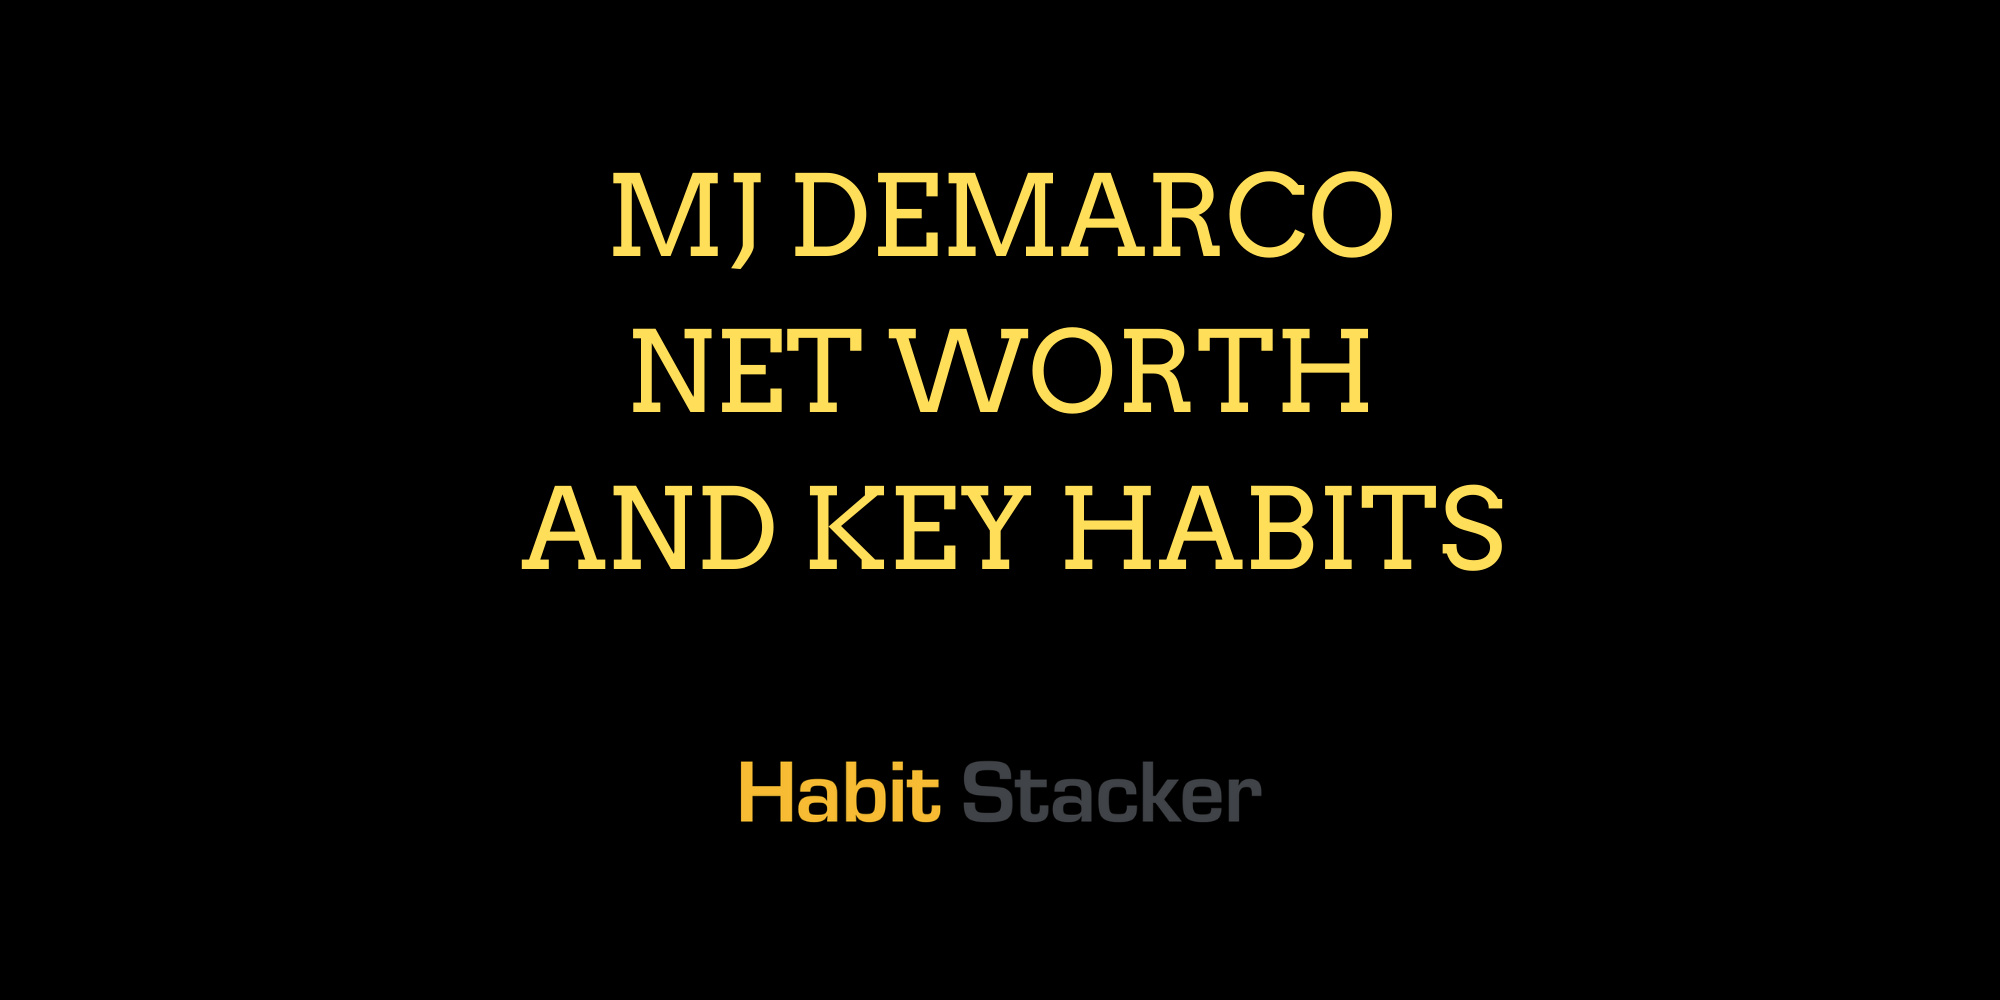 MJ DeMarco Net Worth and Key Habits